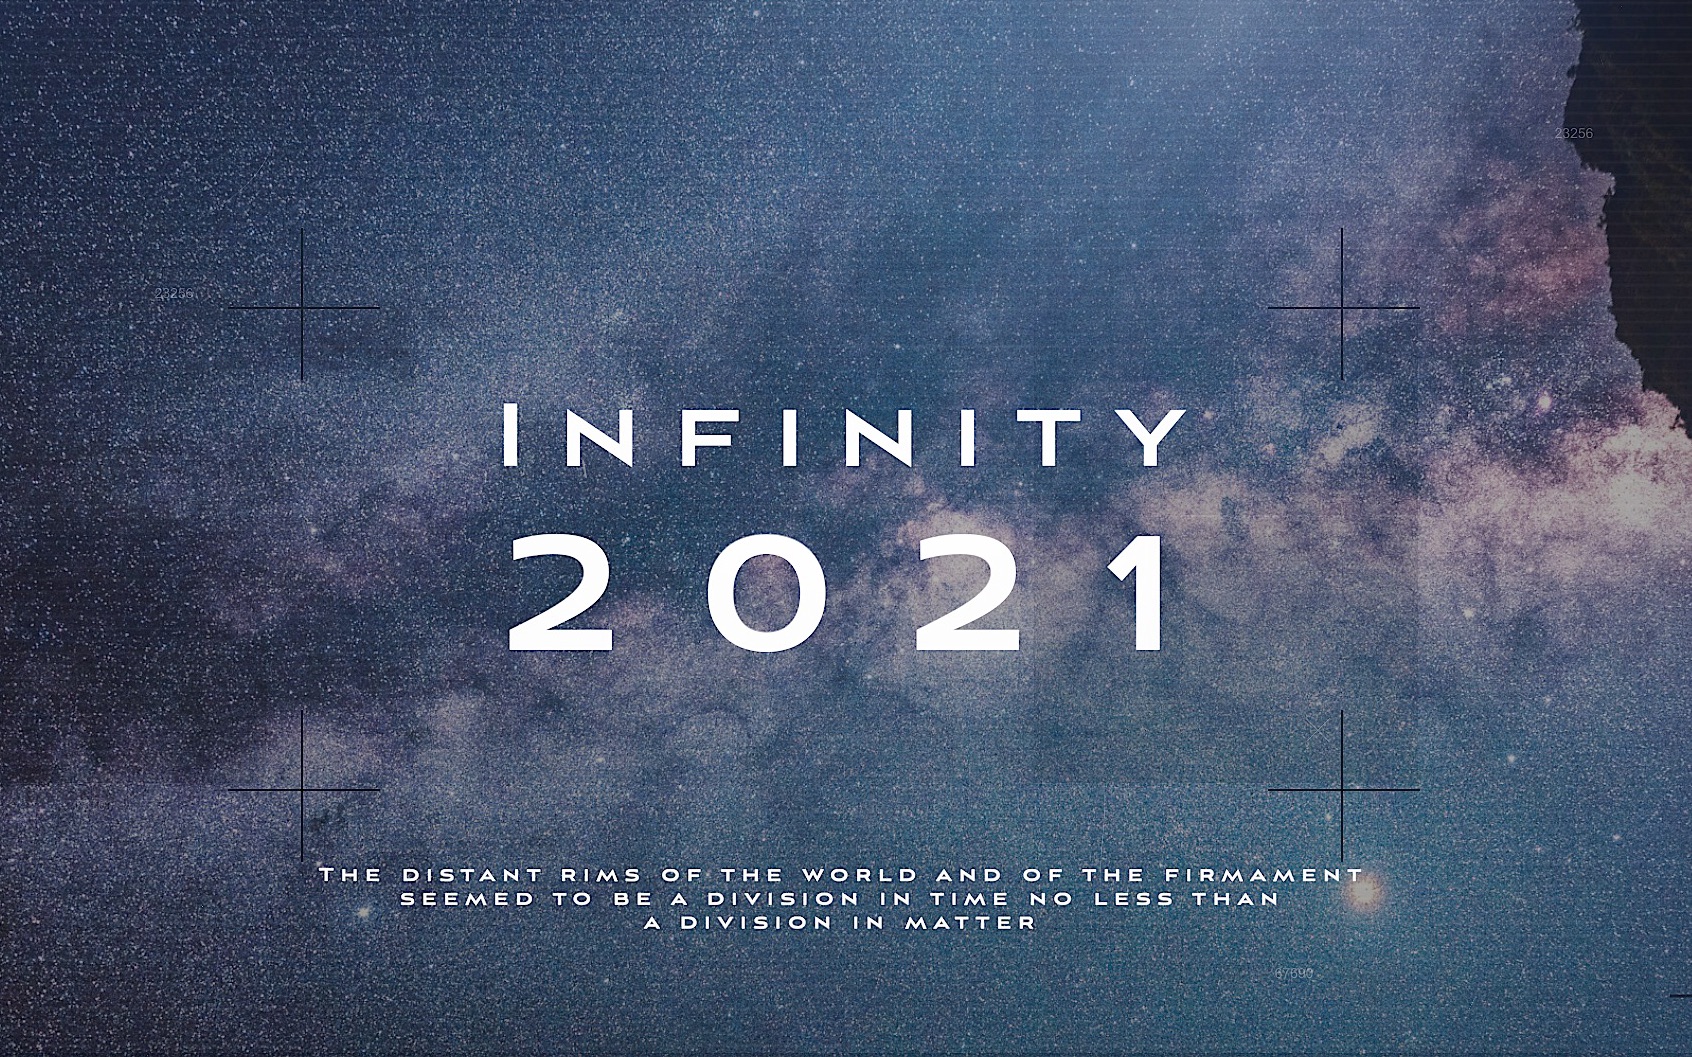 【回顾展望集】infinity 2021